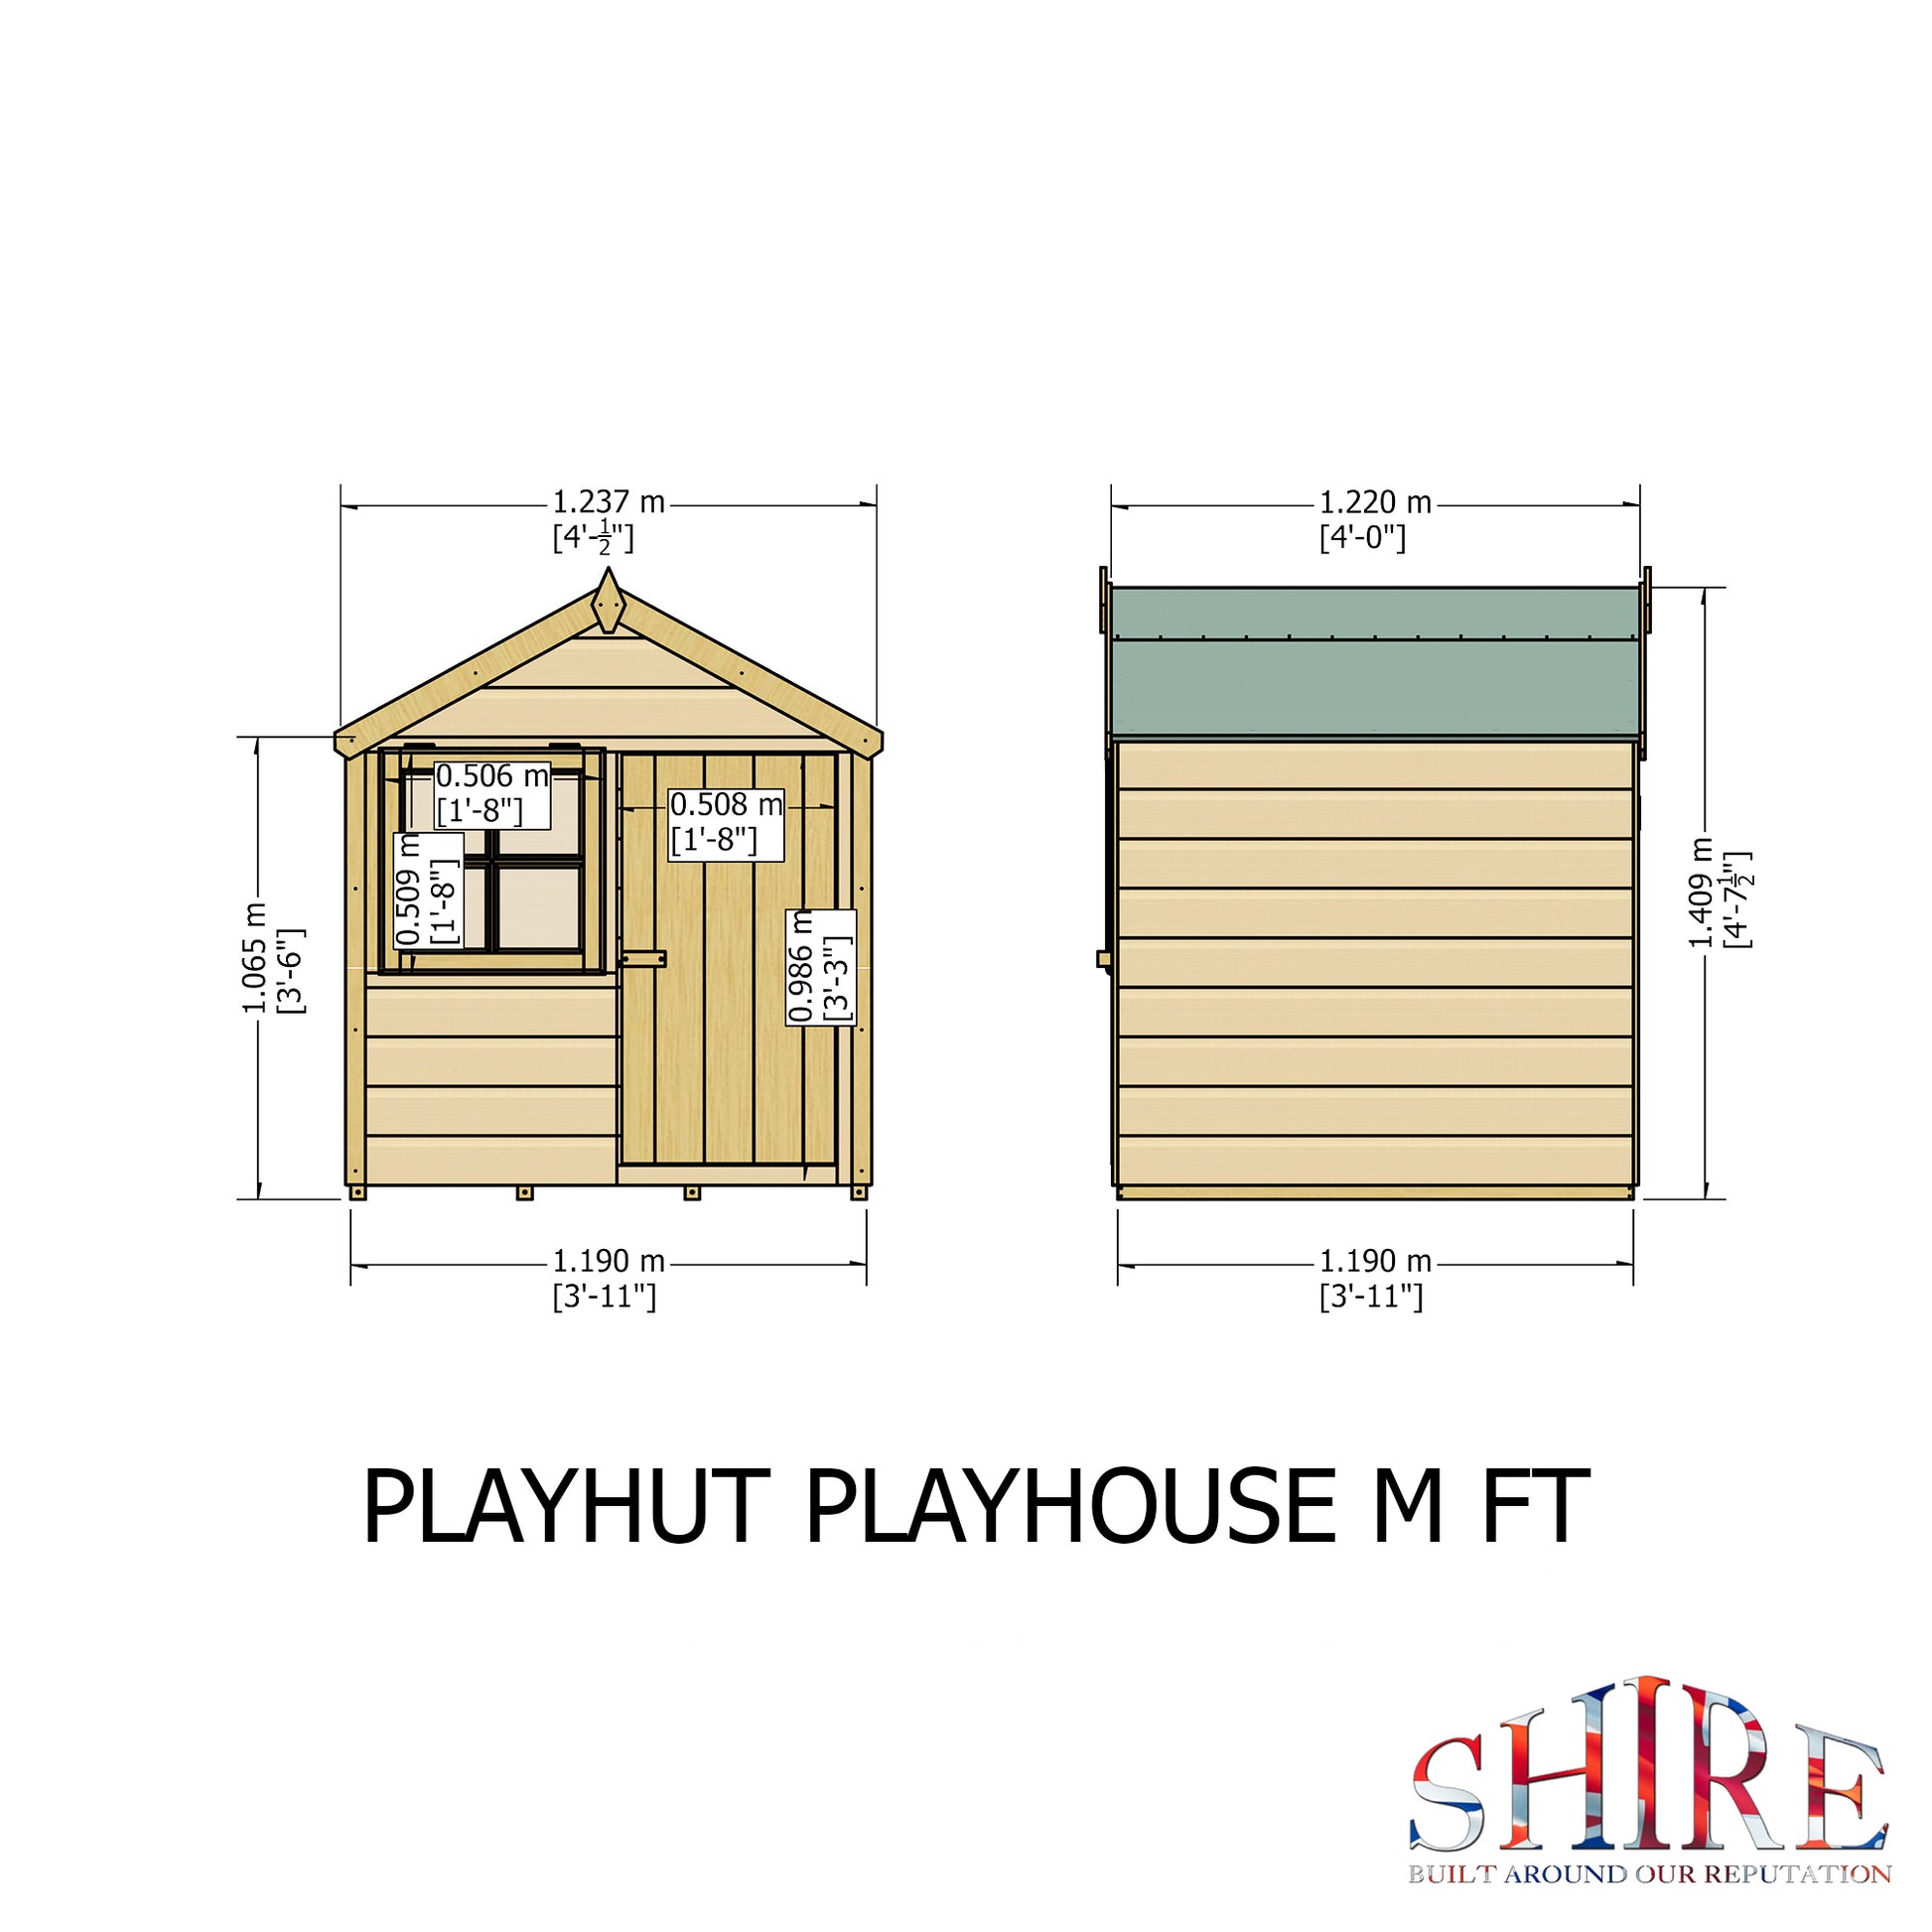 Shire 4 X 4 Play hut Playhouse - Premium Garden